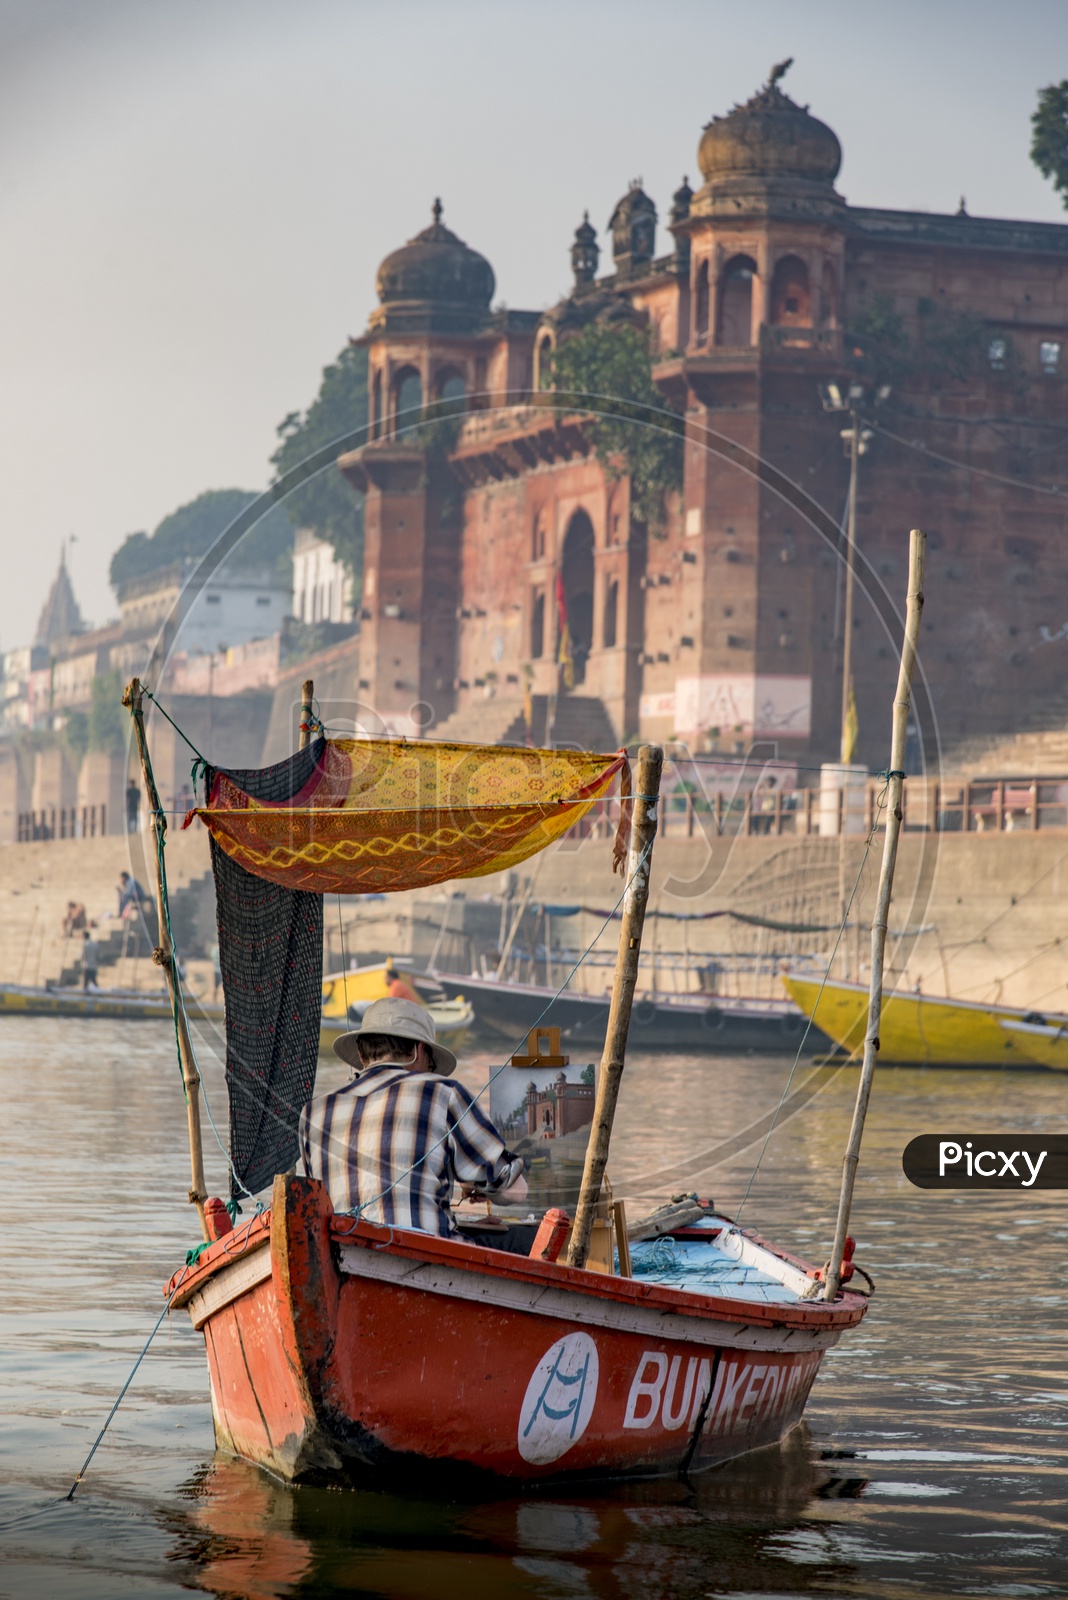 Boat in the Ganga River